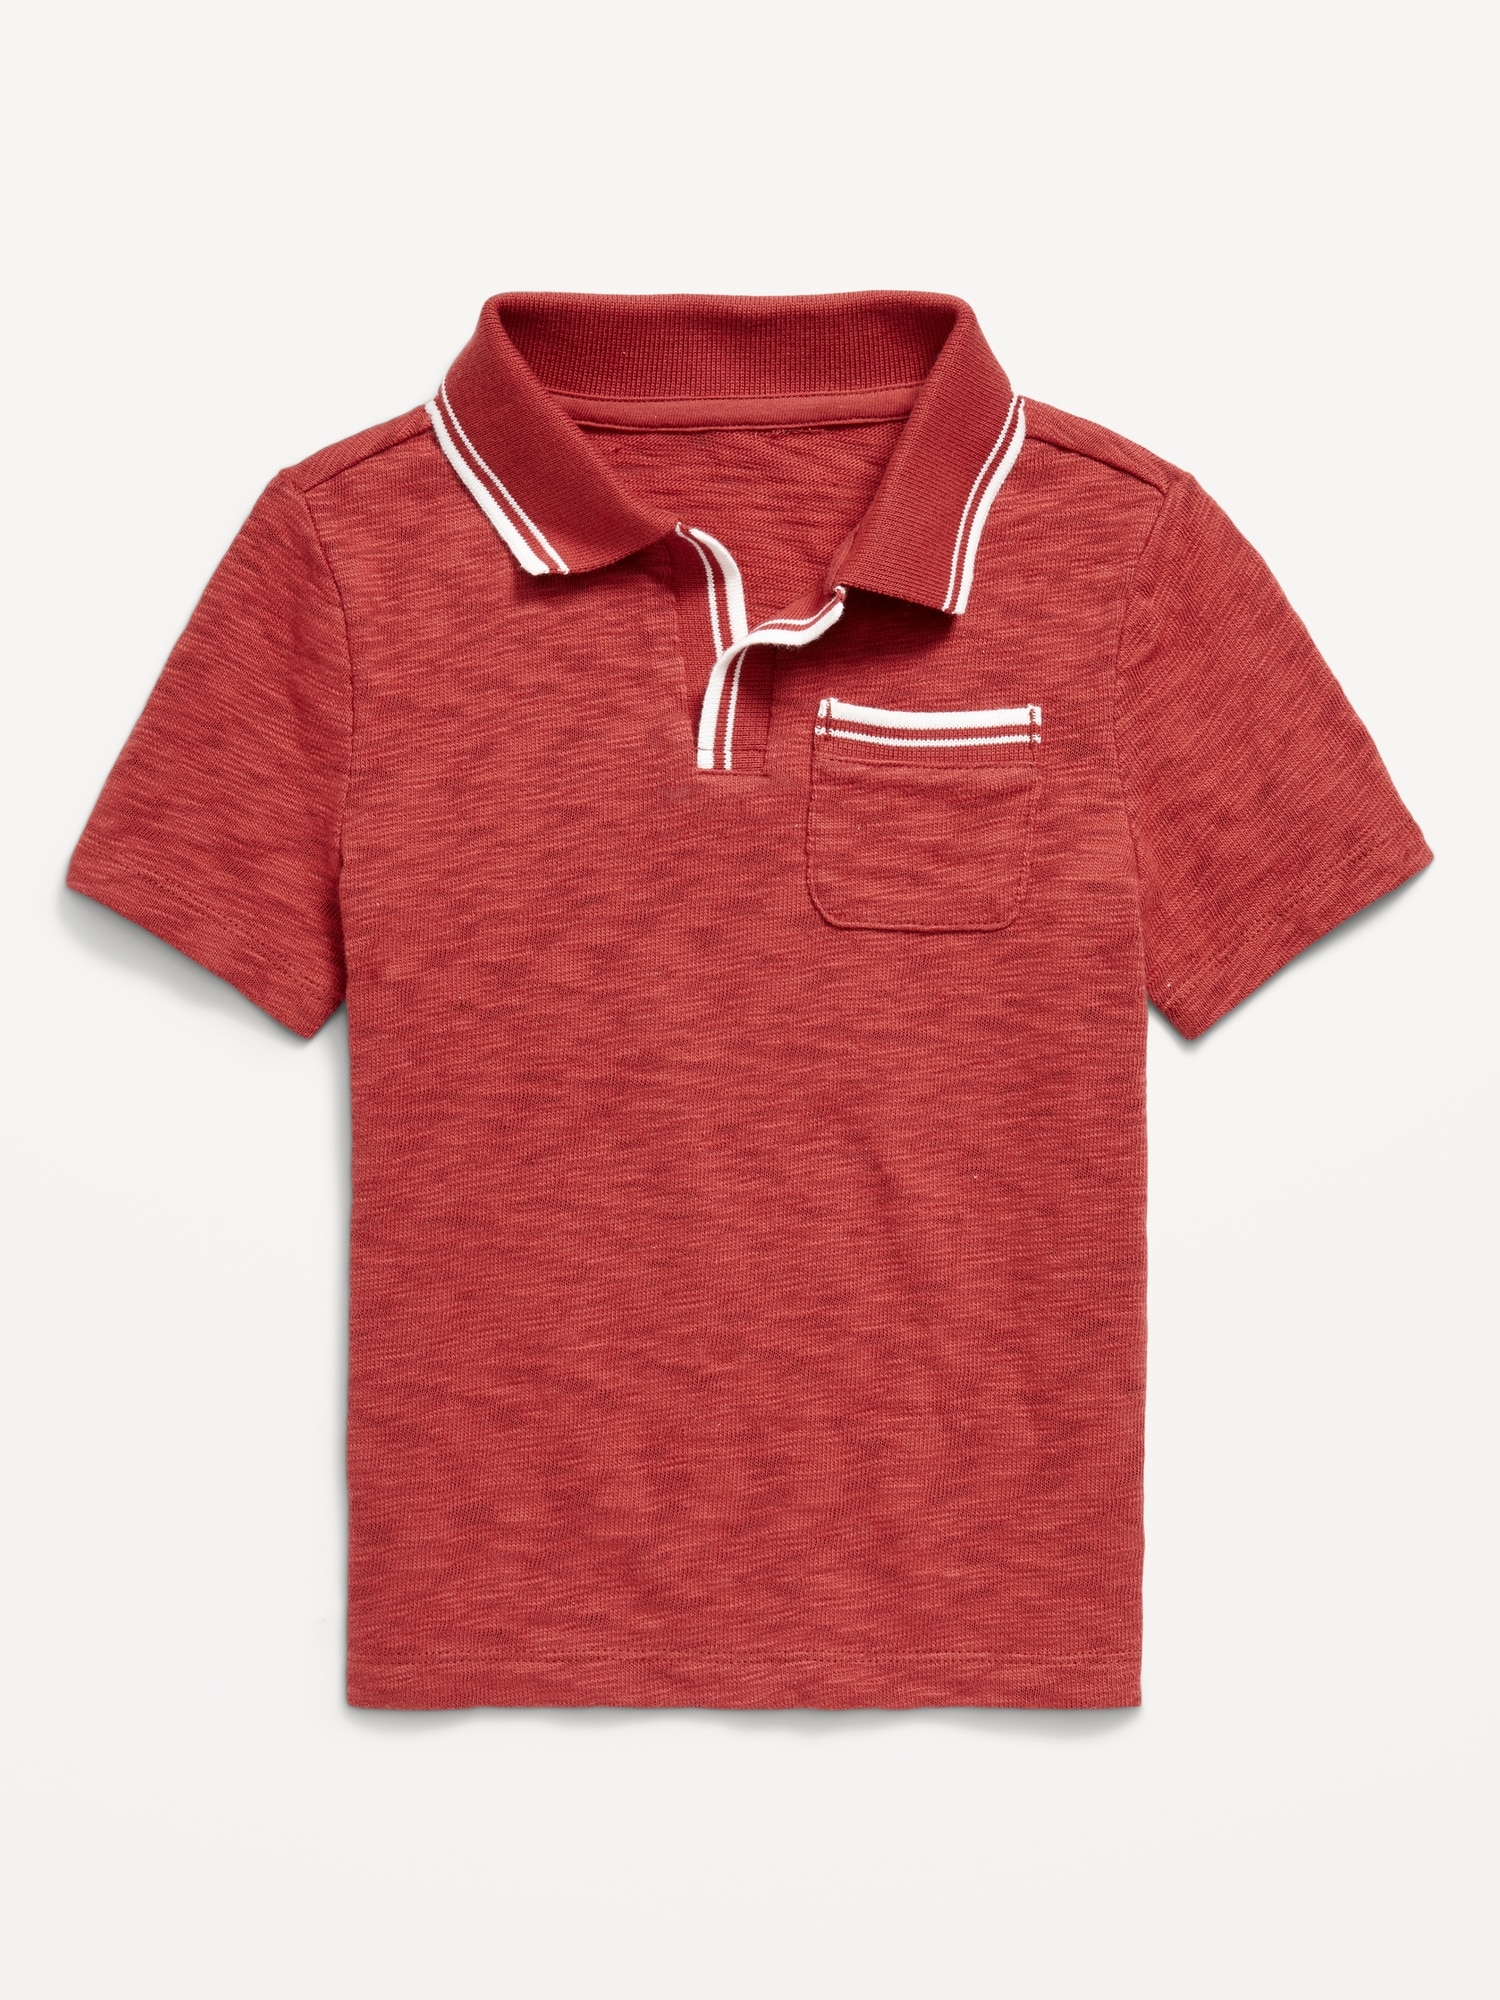 Short-Sleeve Collared Pocket Shirt for Toddler Boys